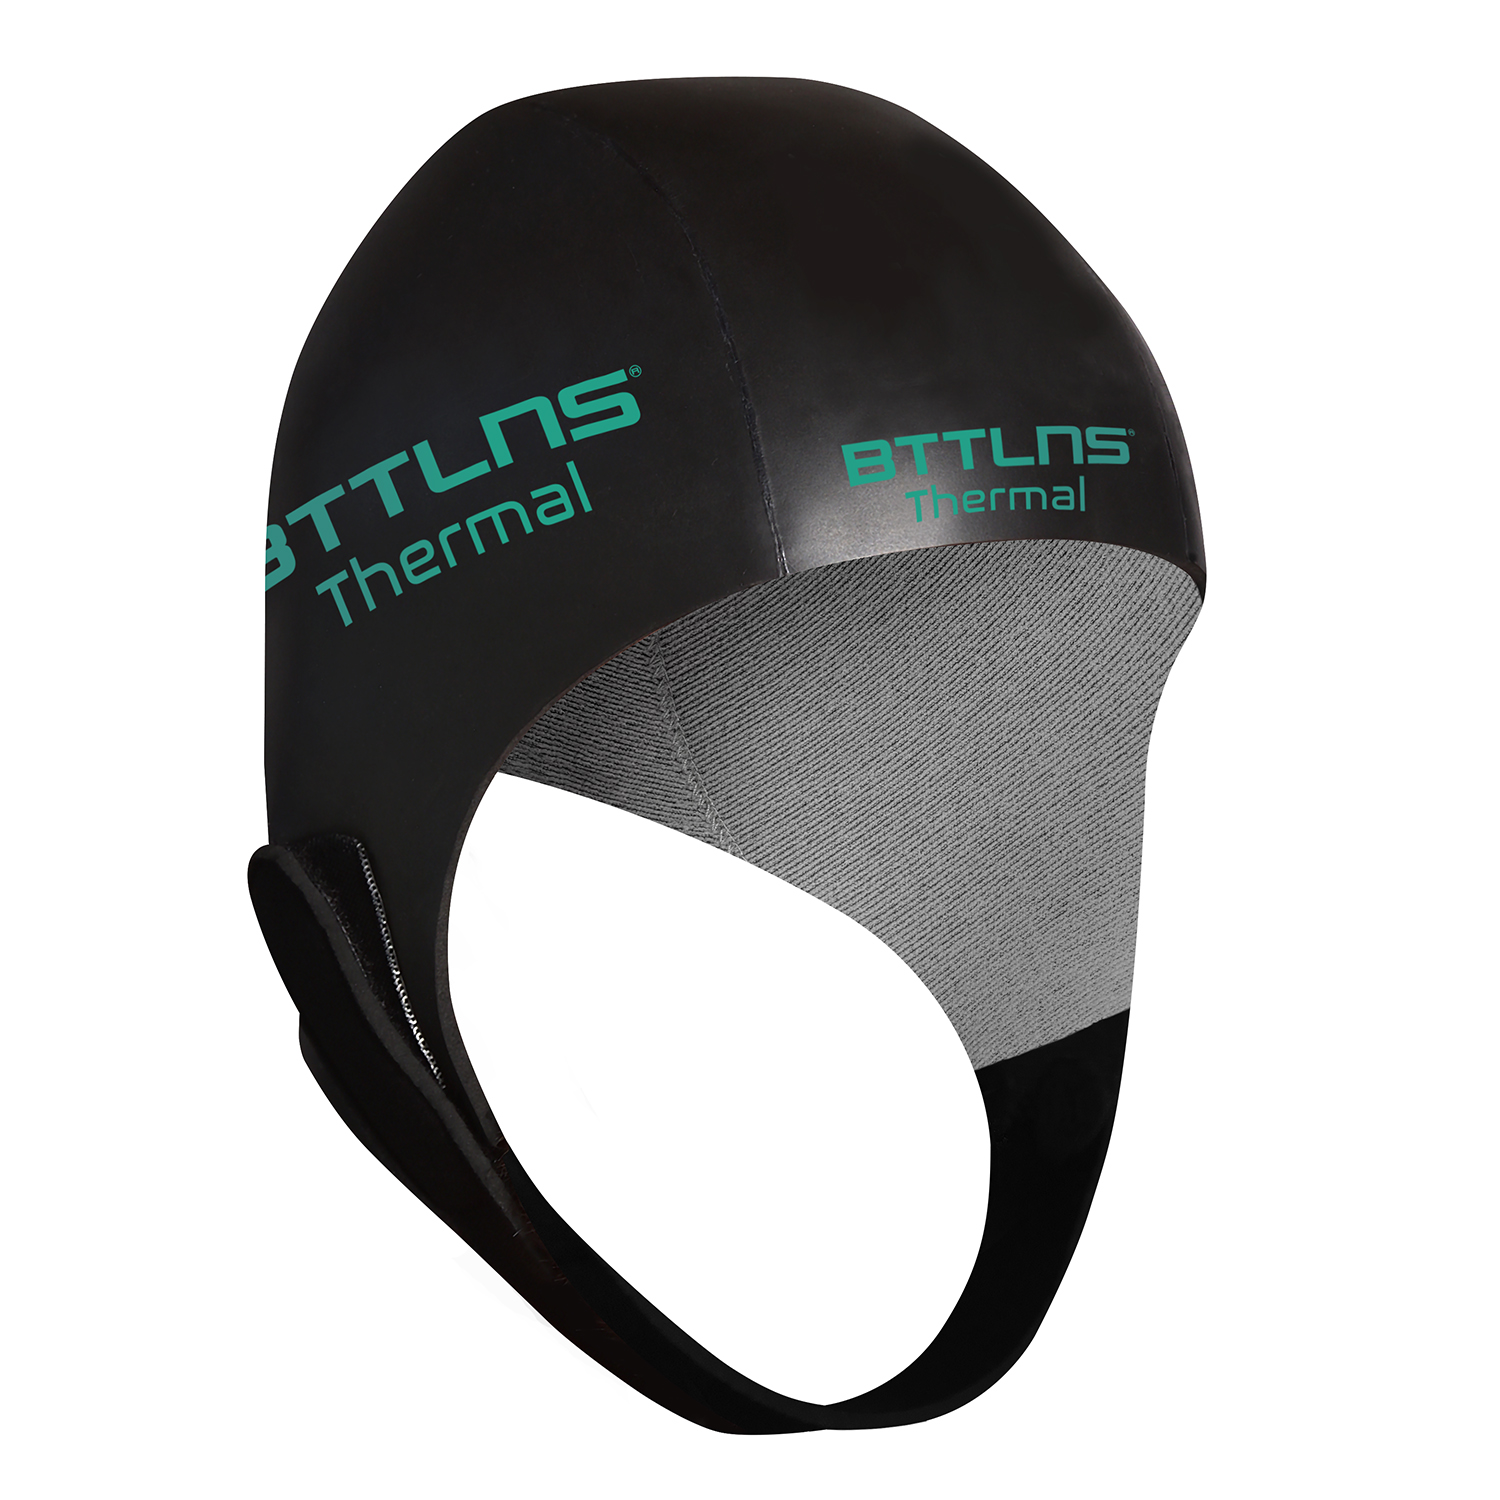 BTTLNS Neoprene thermal swim cap Zethes 1.0 mint  0121015-036